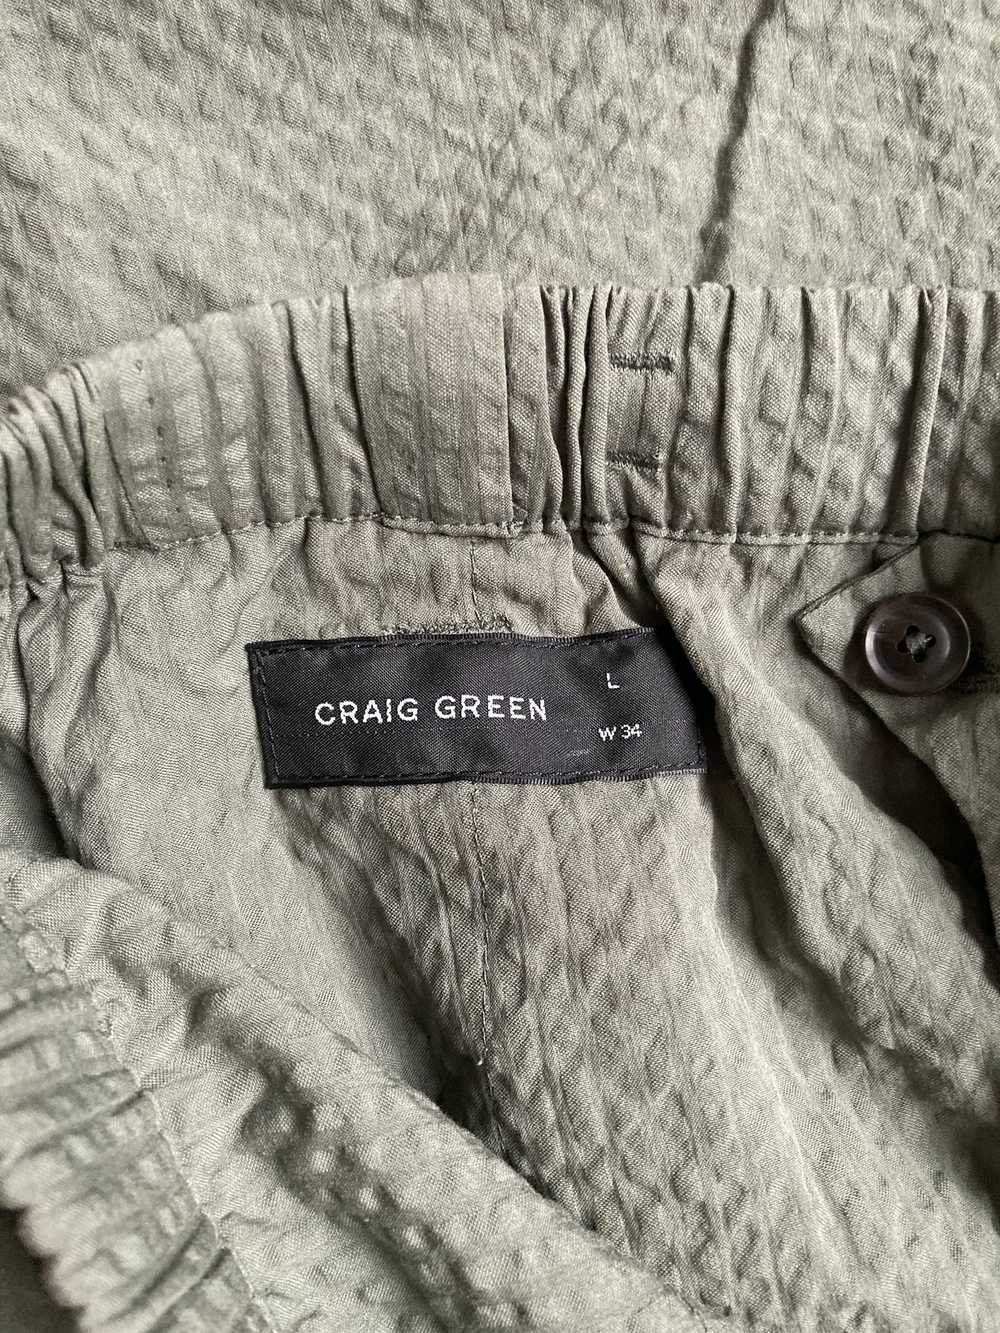 Craig Green Craig Green Seersucker Trousers - image 3